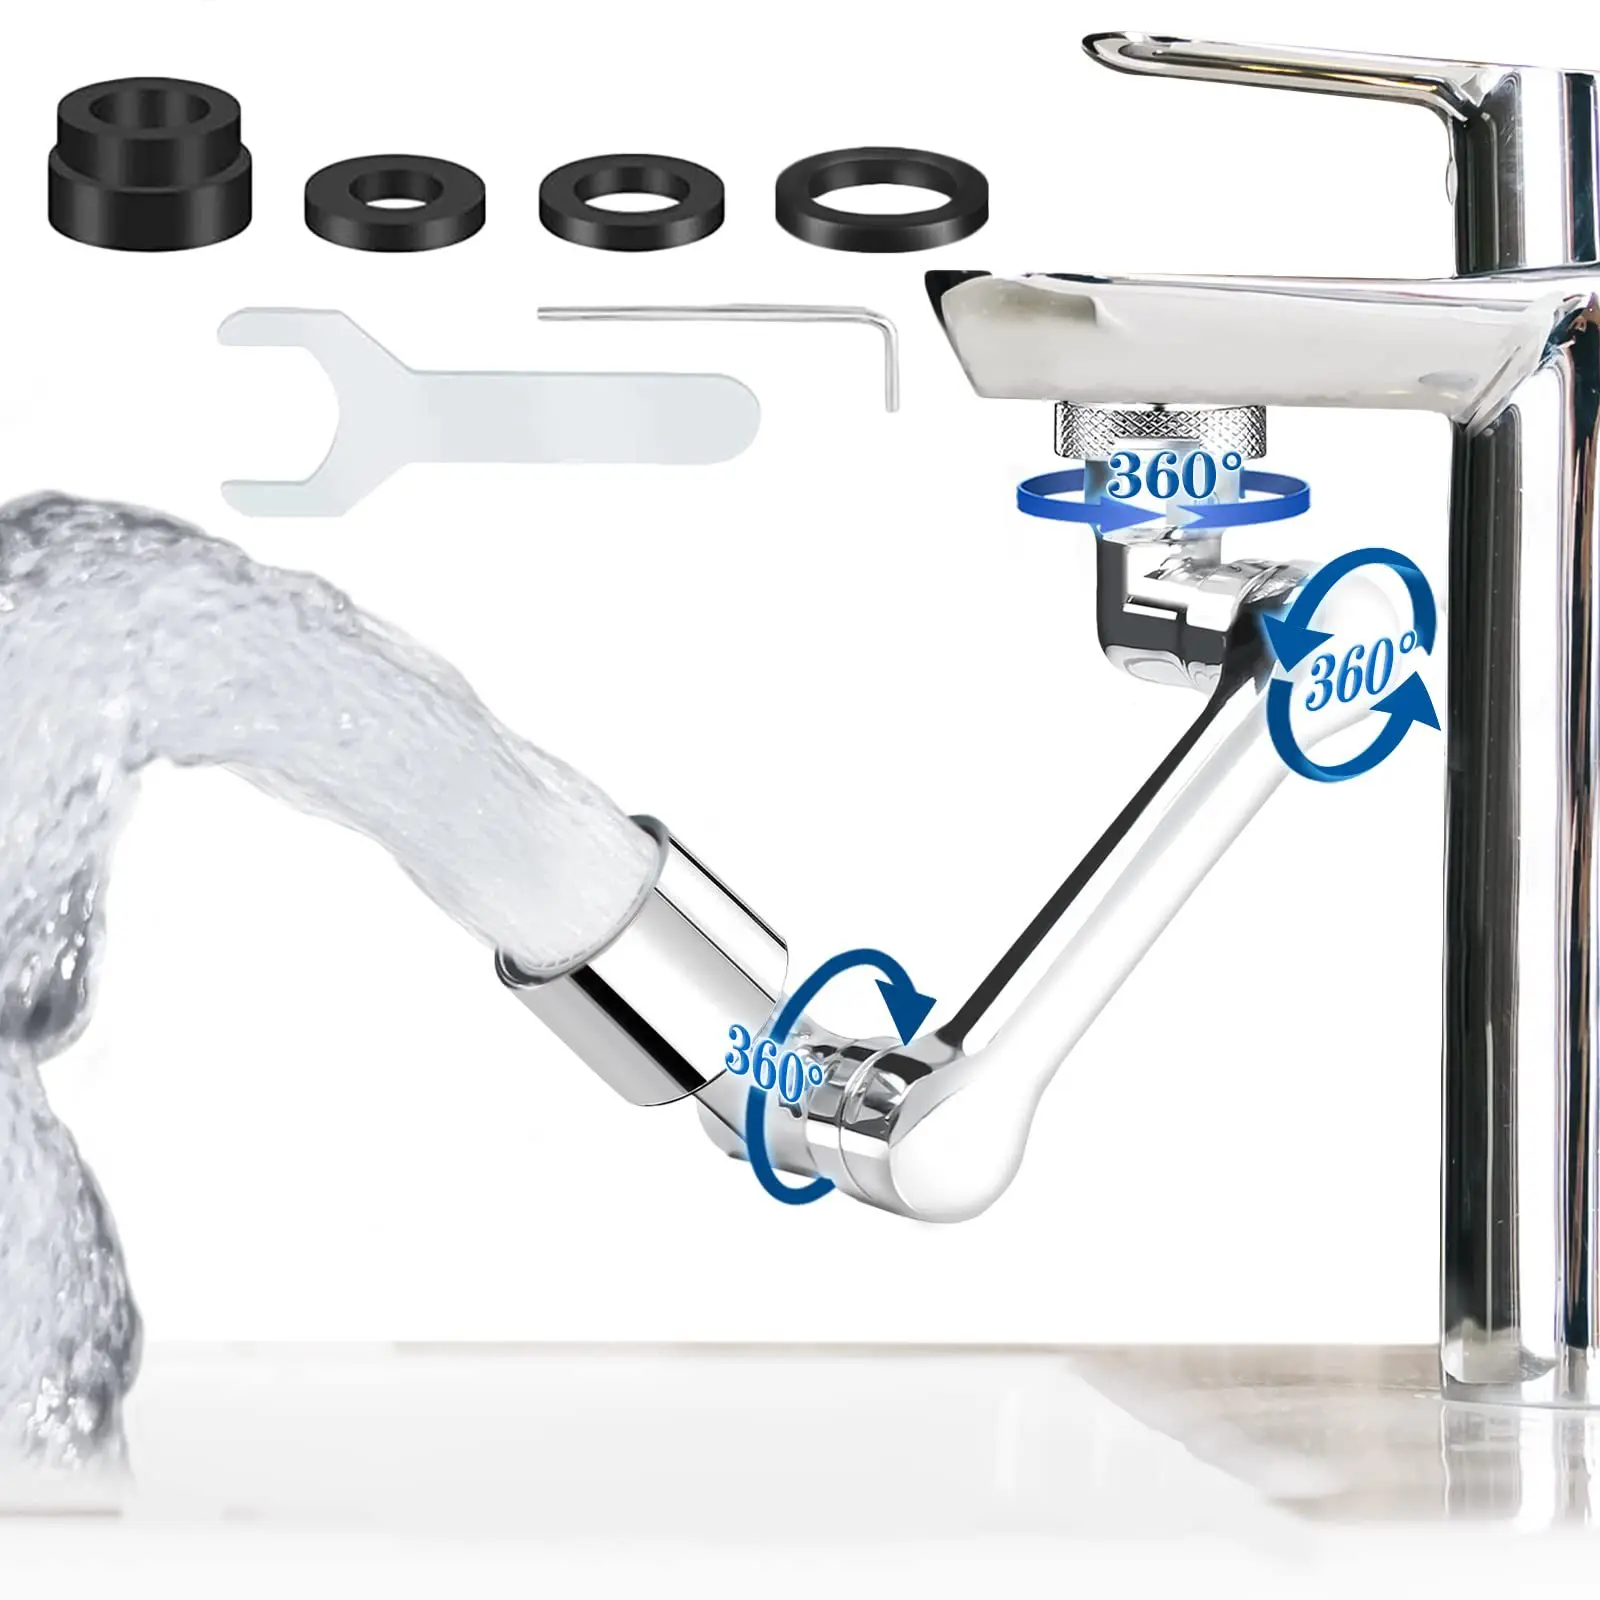 

Mechanical arm bubbler universal faucet lavatory rotate 1080 degrees leading toilet splash water mouth wash gargle